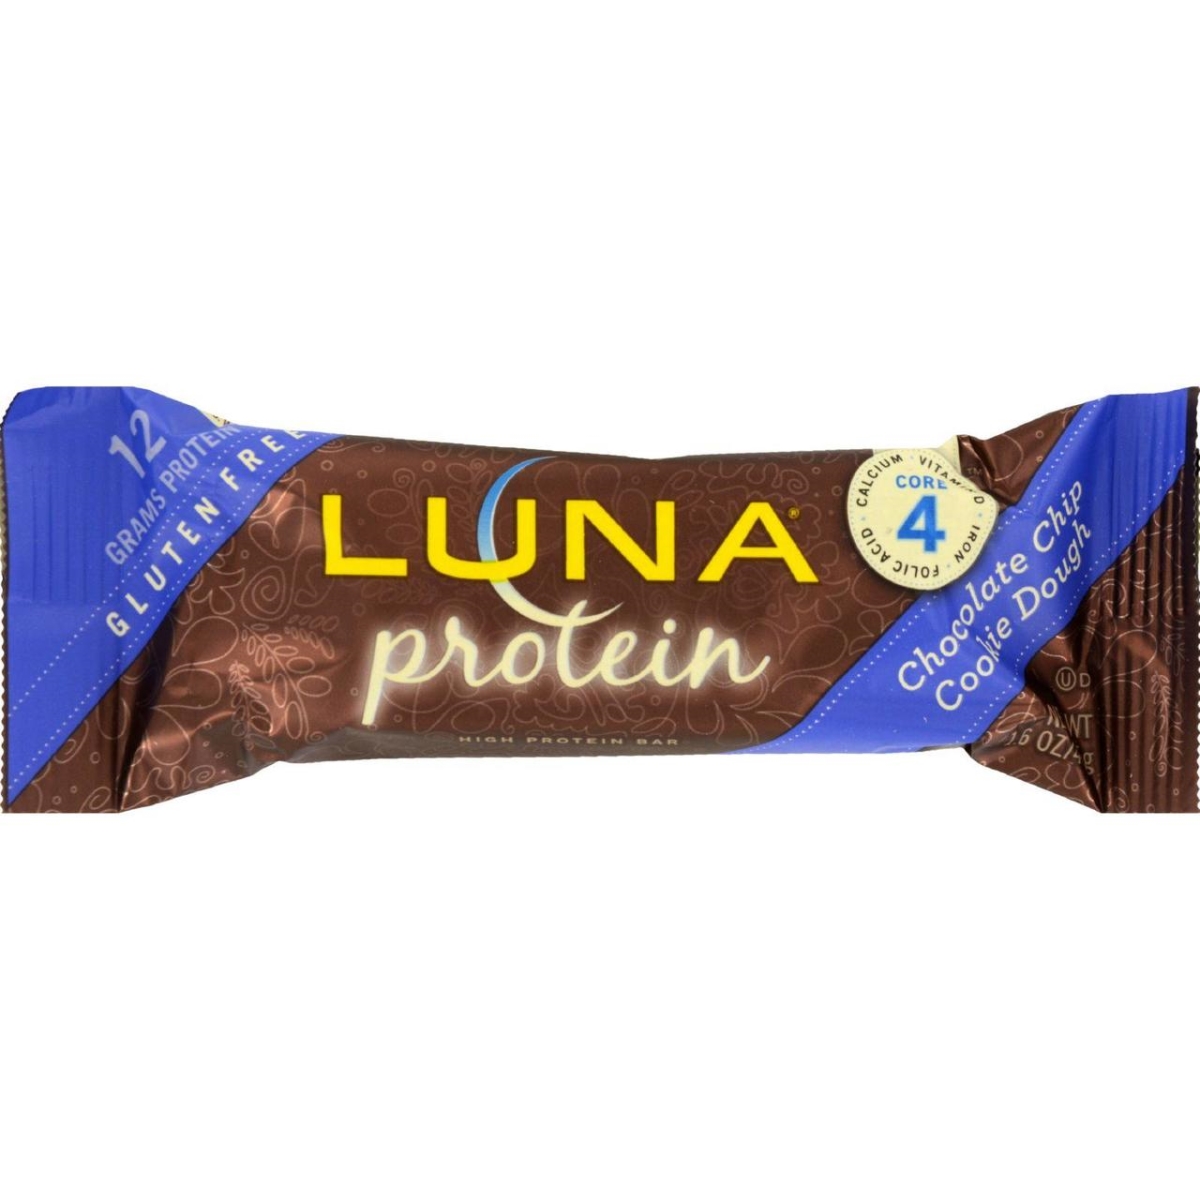 Clif Bar Hg0117481 1.6 Oz Luna Protein Bar - Cookie Dough, Case Of 12